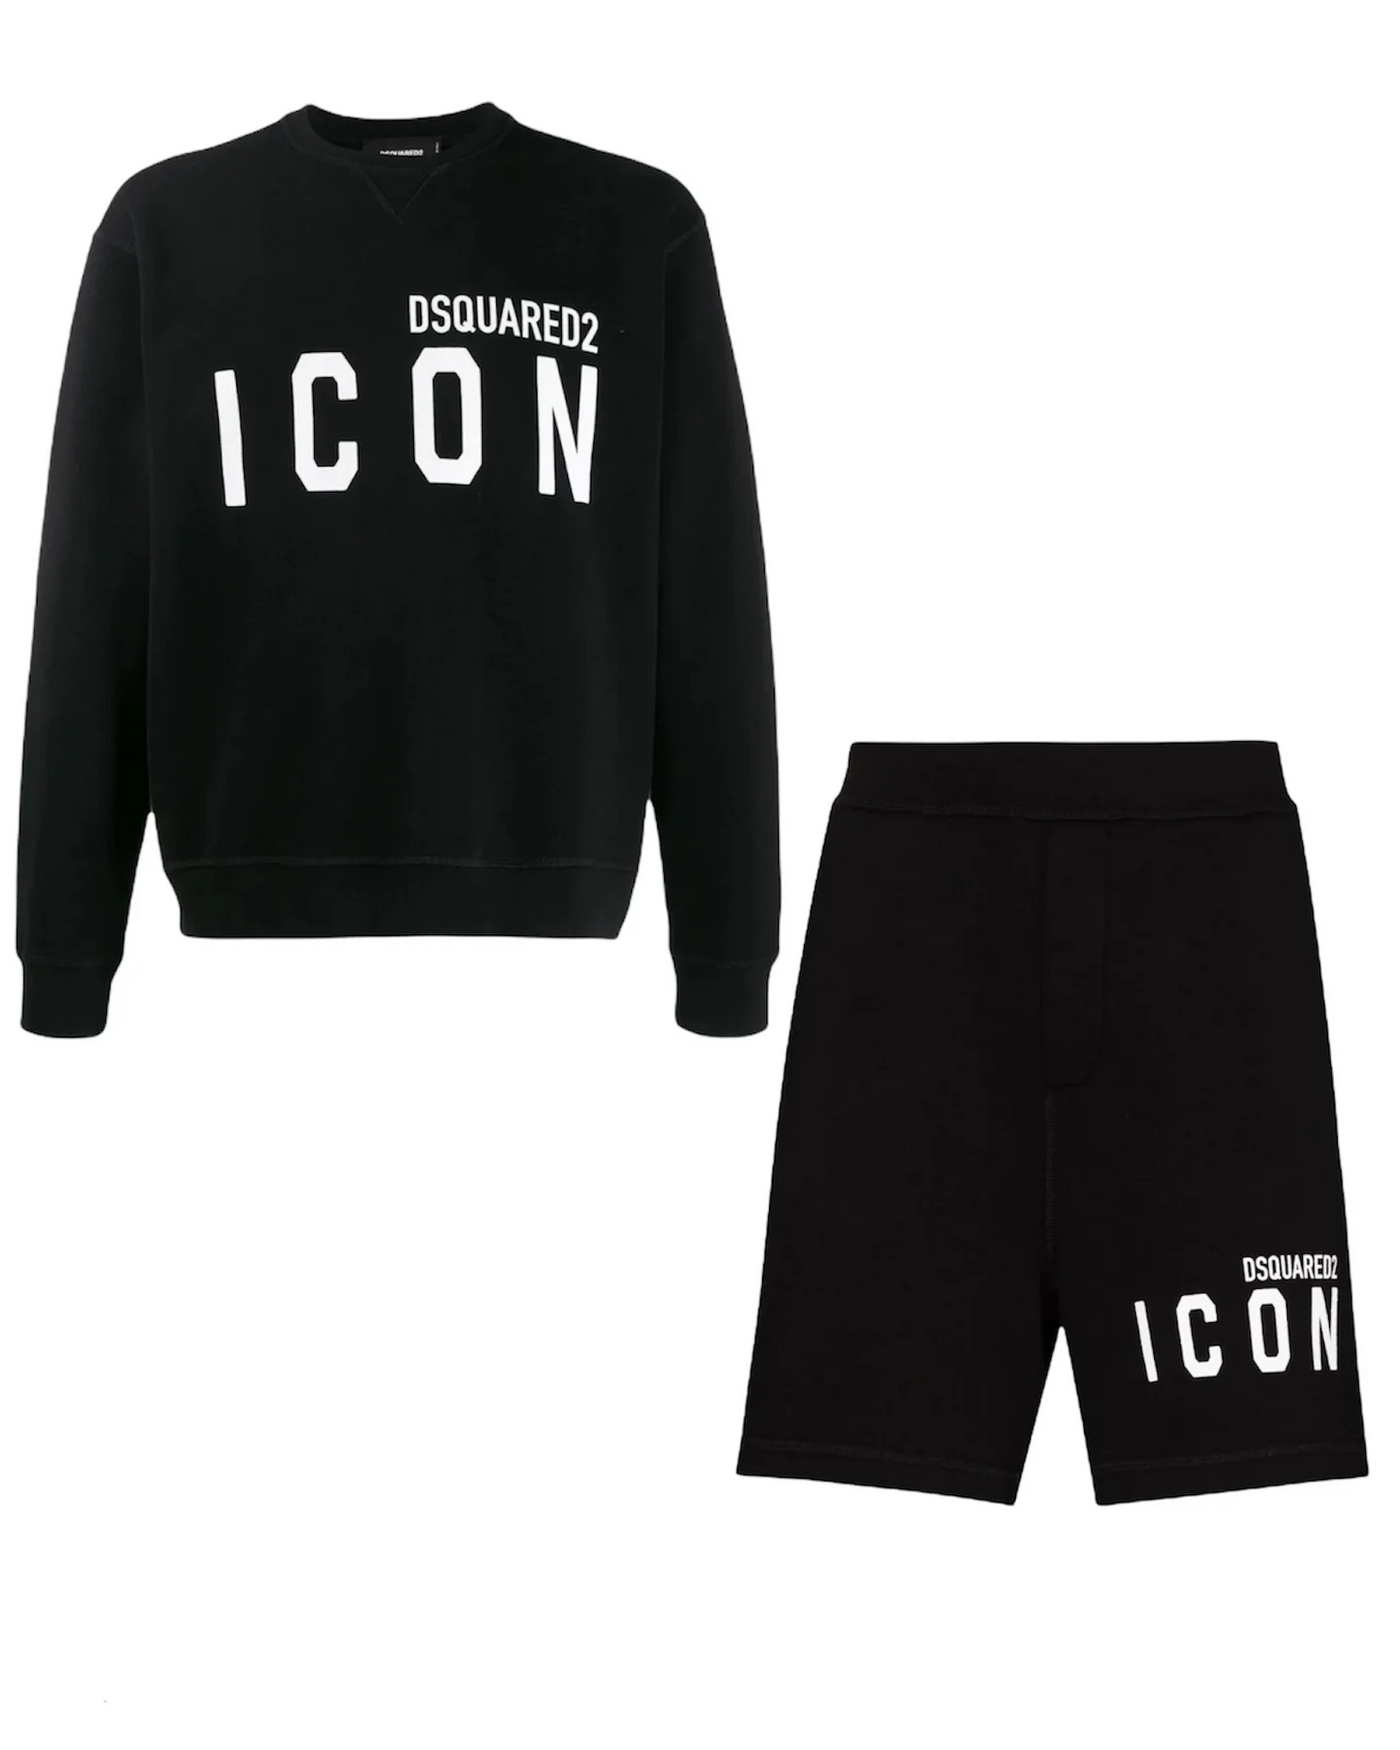 Dsquared2 Icon Sweatshirt & Shorts Set in Black